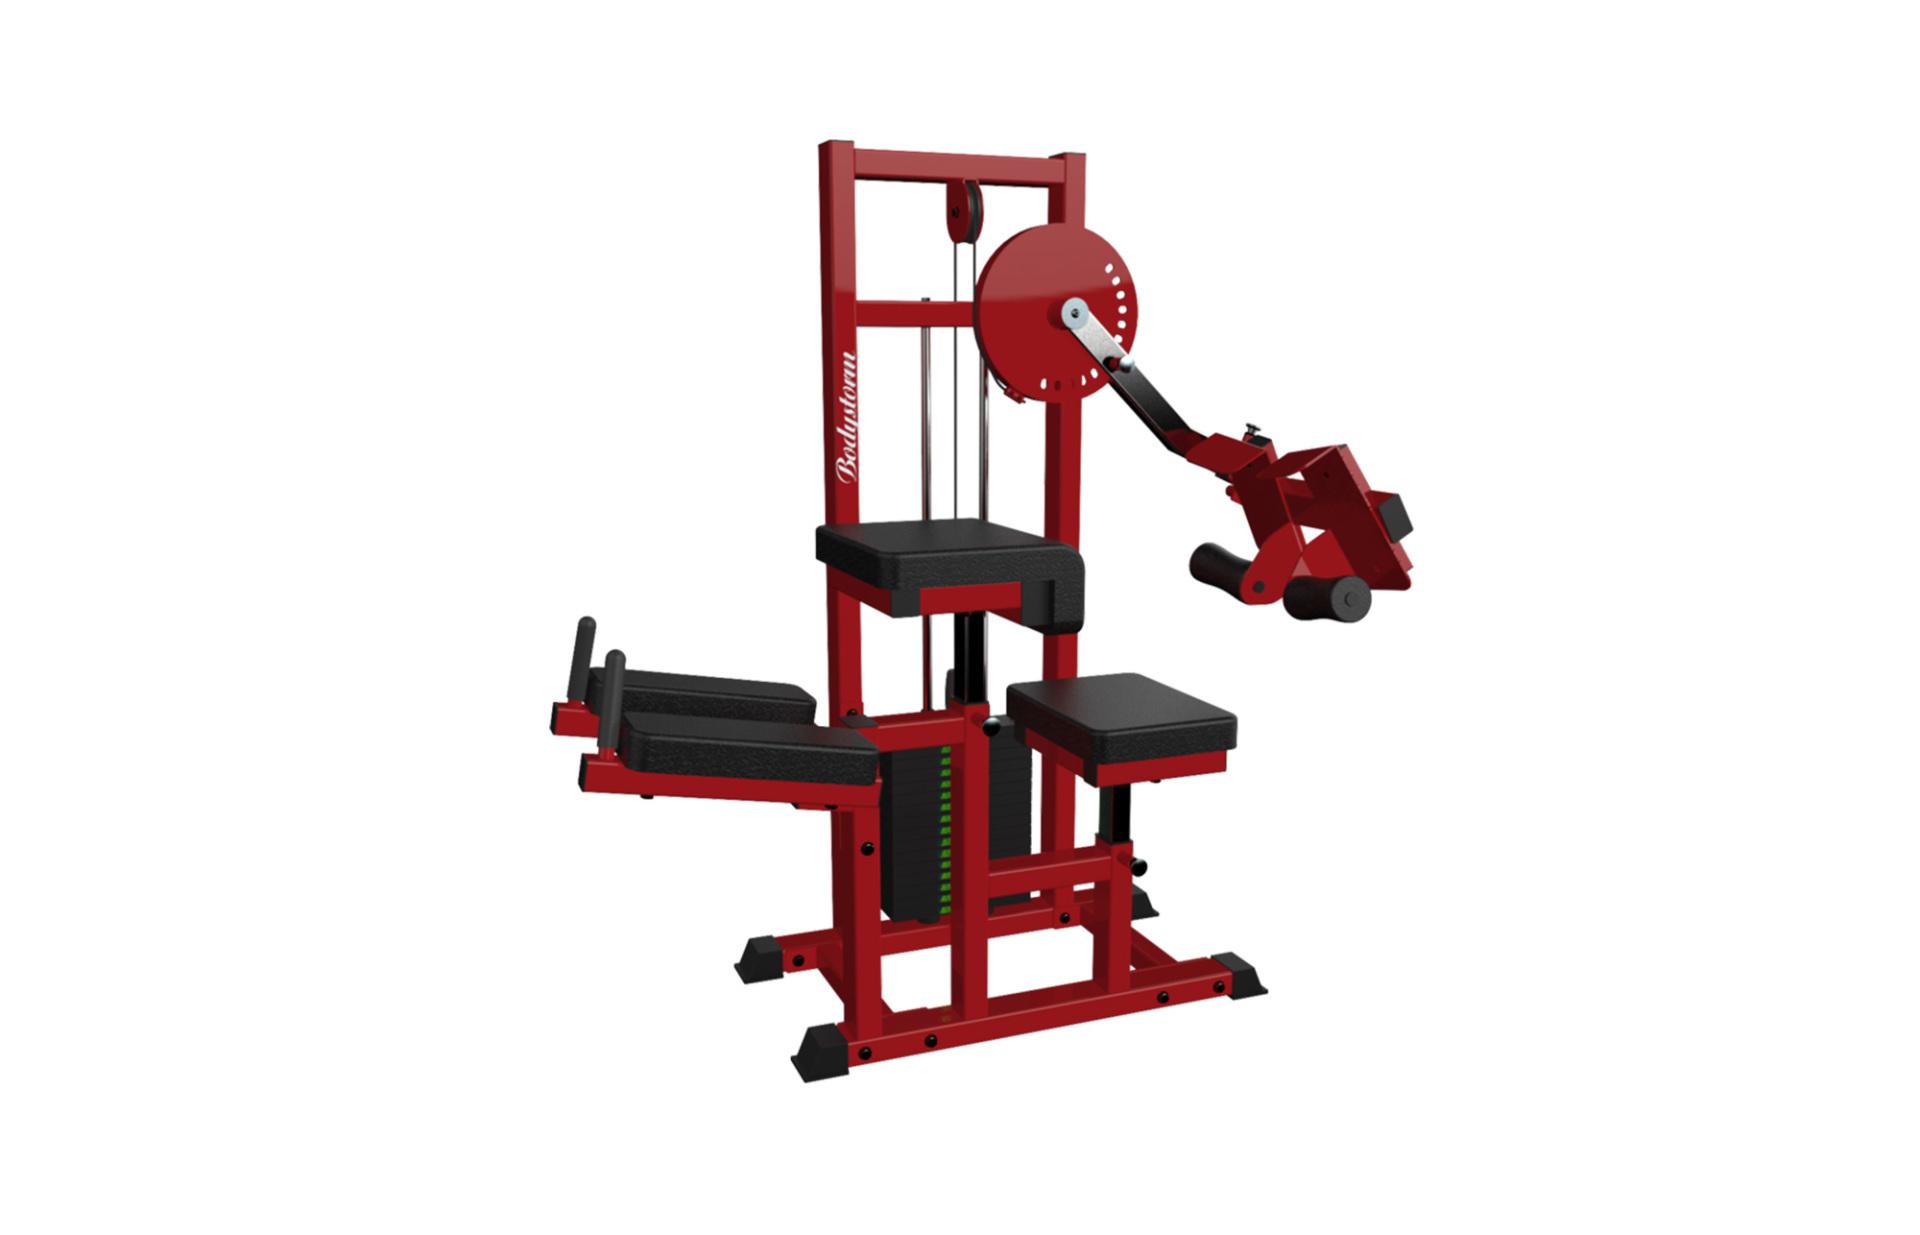 Glute Extension gym fitness equipment machine